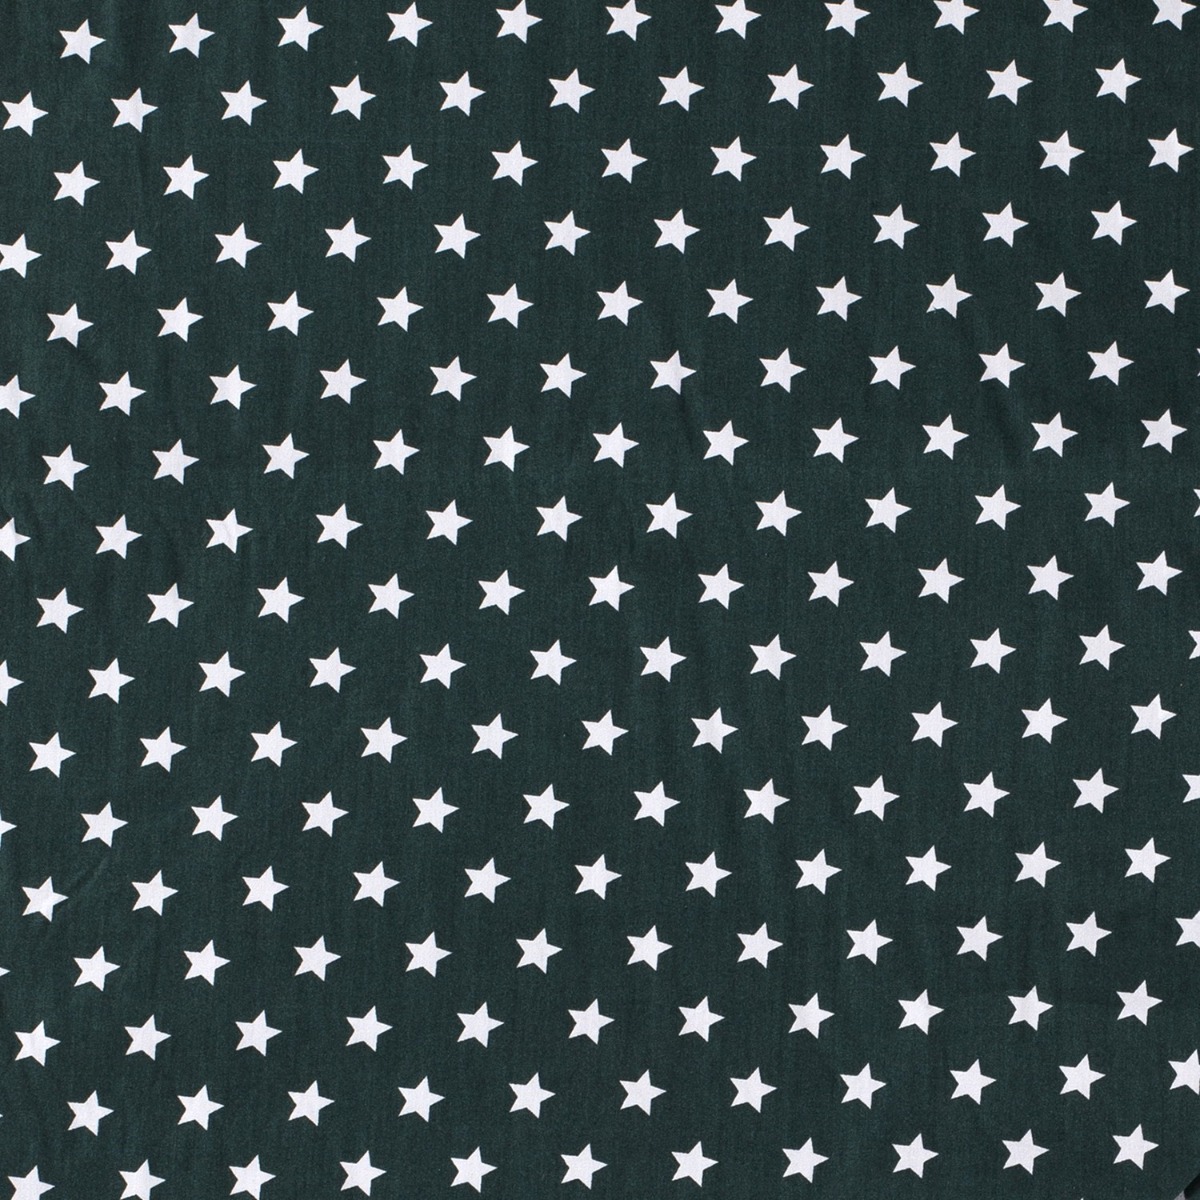 Baumwolle Sterne Standard Dunkelgrün